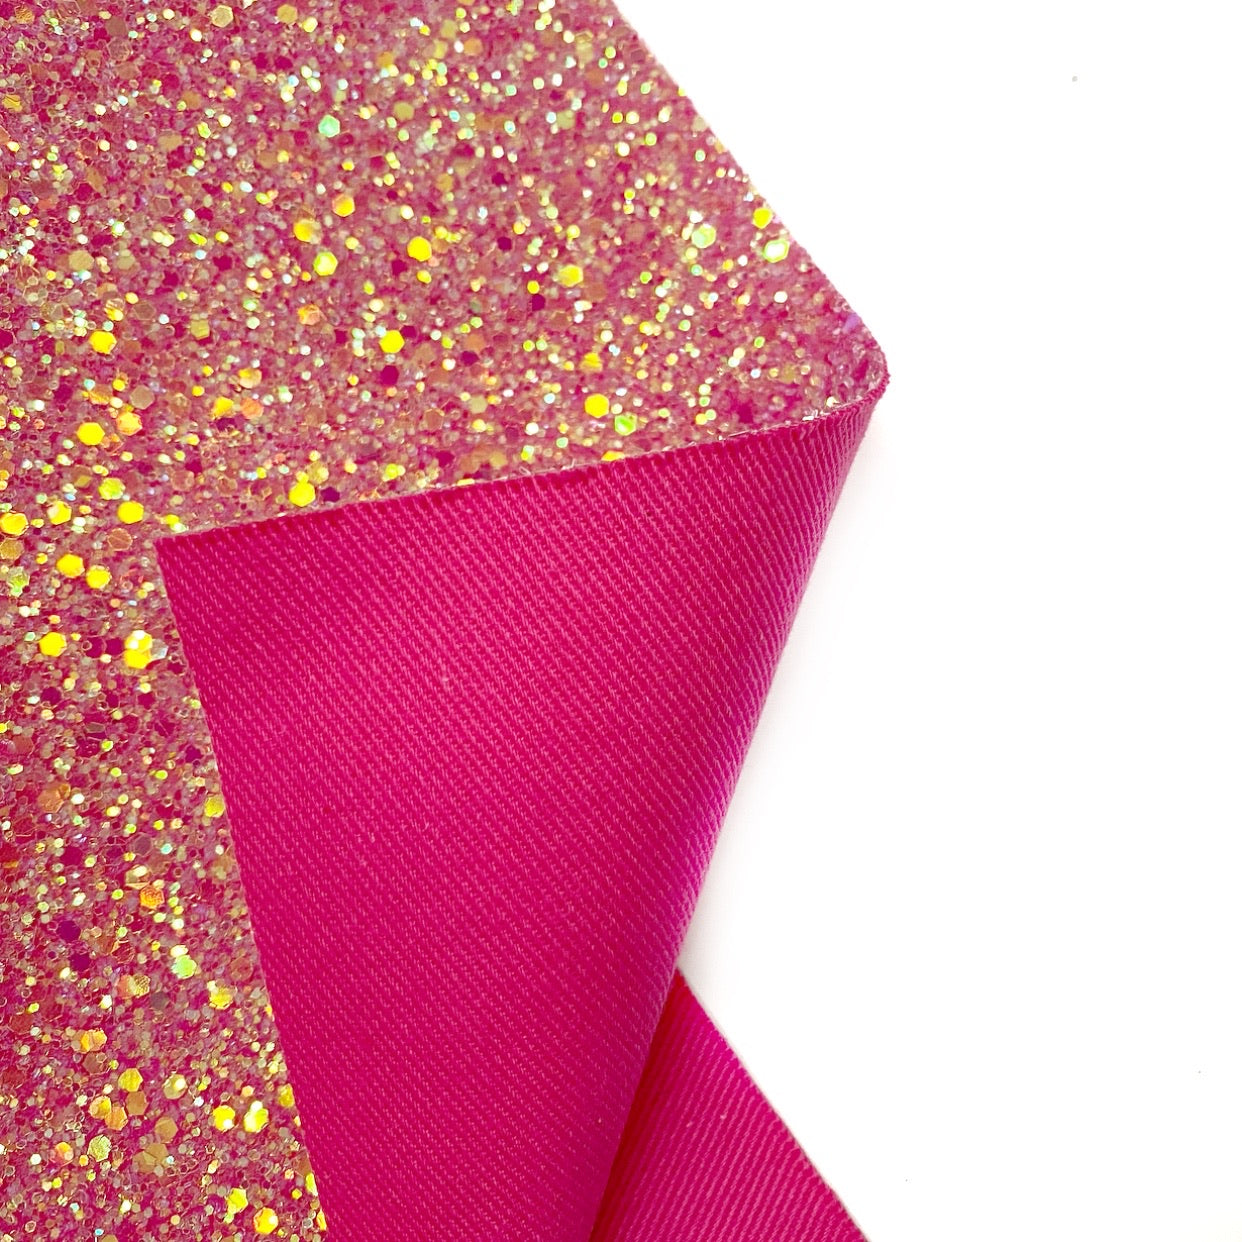 Hot Pink Fairytales Premium Chunky Glitter Fabric